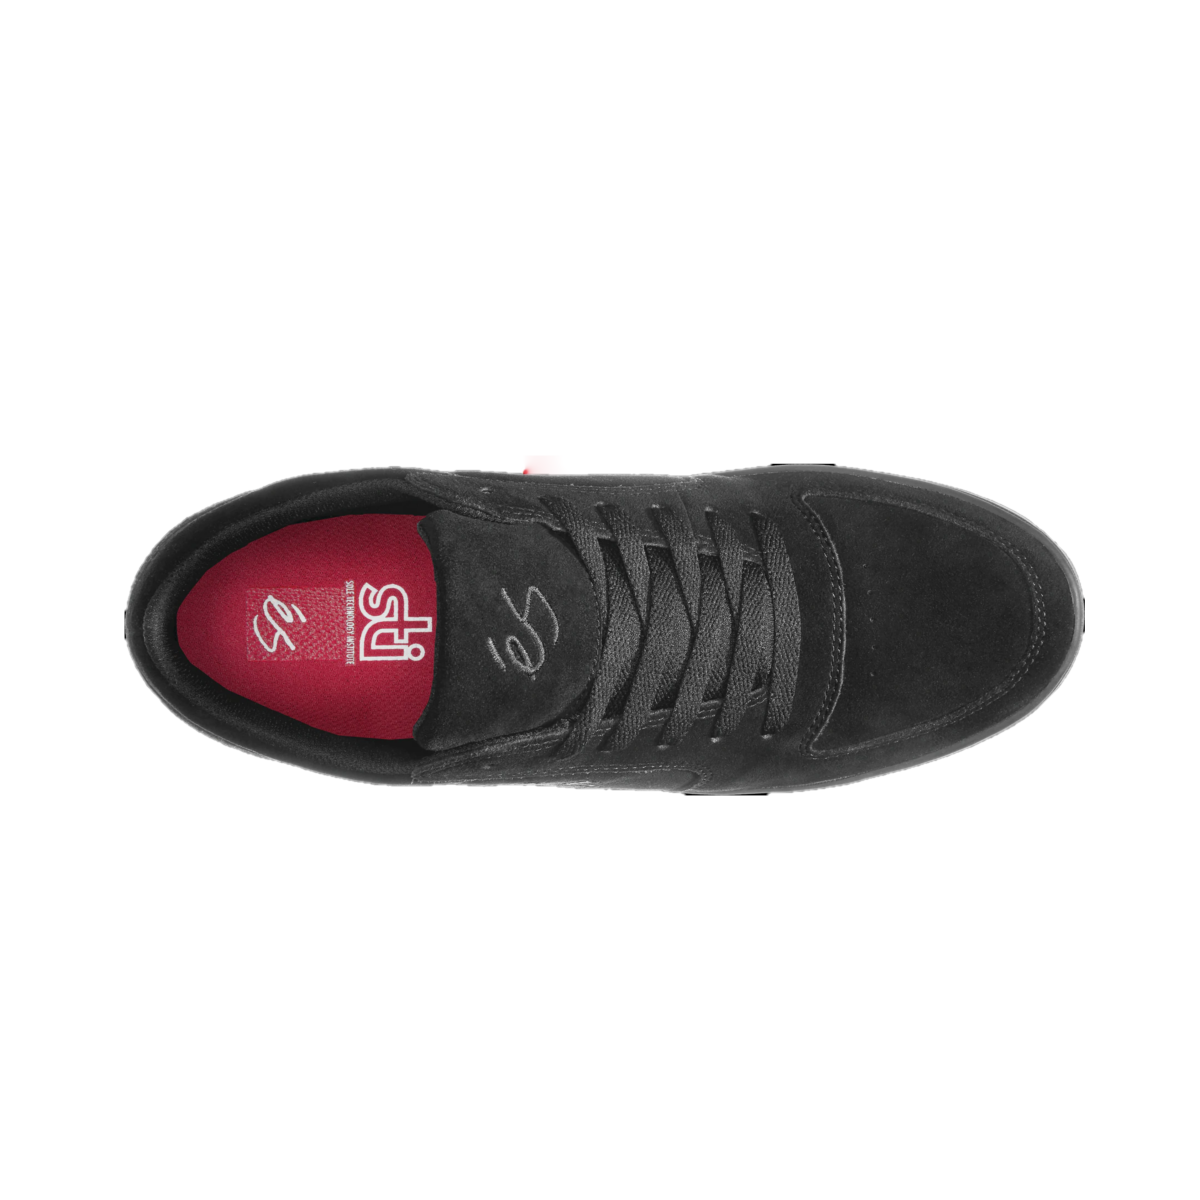 ÉS 5101000184/003 EOS MN'S (Medium) Black Suede & Synthetic Skate Shoes